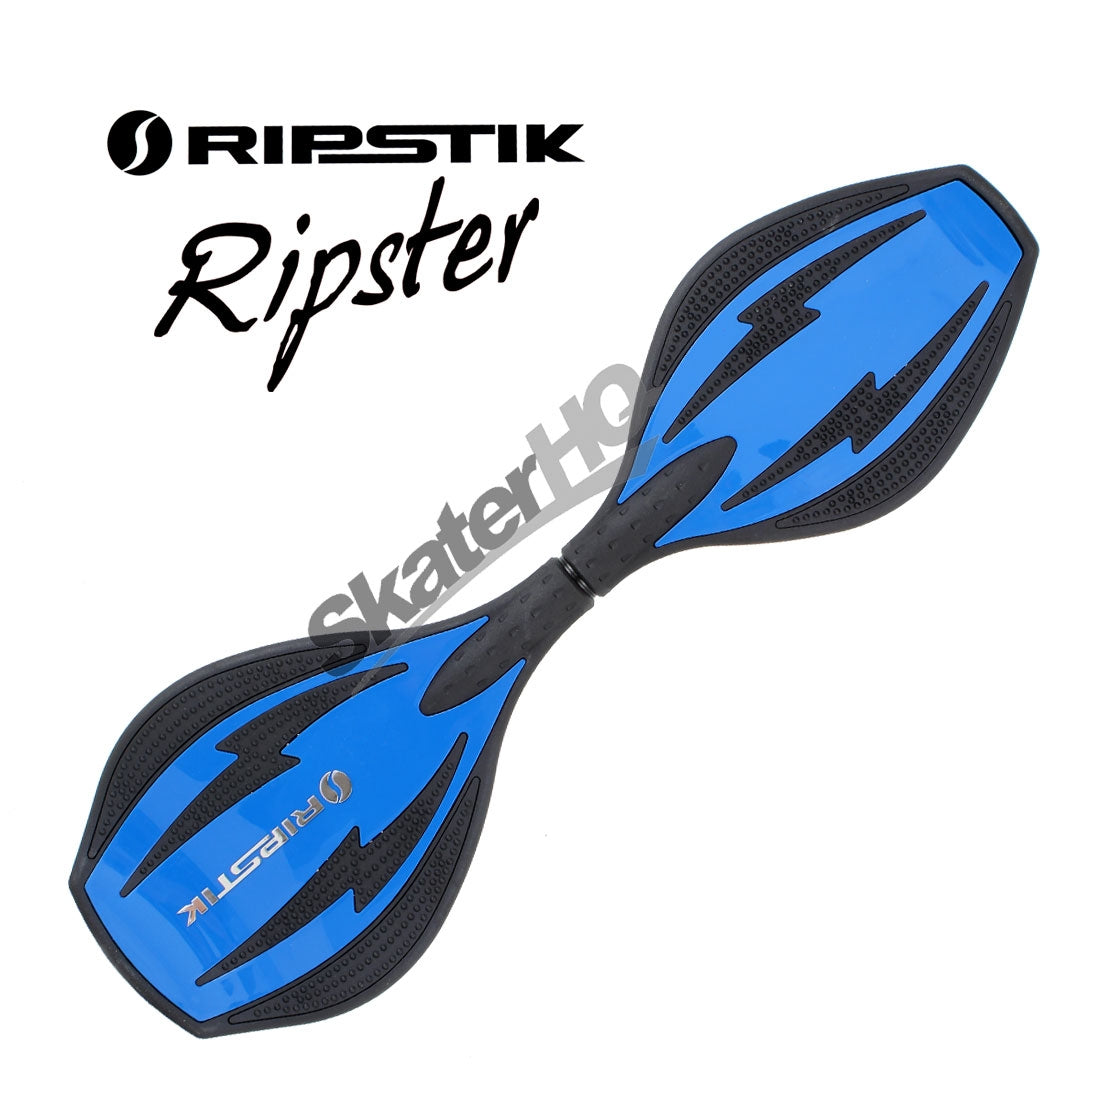 Razor RipStik Ripster - Blue/Black Other Fun Toys